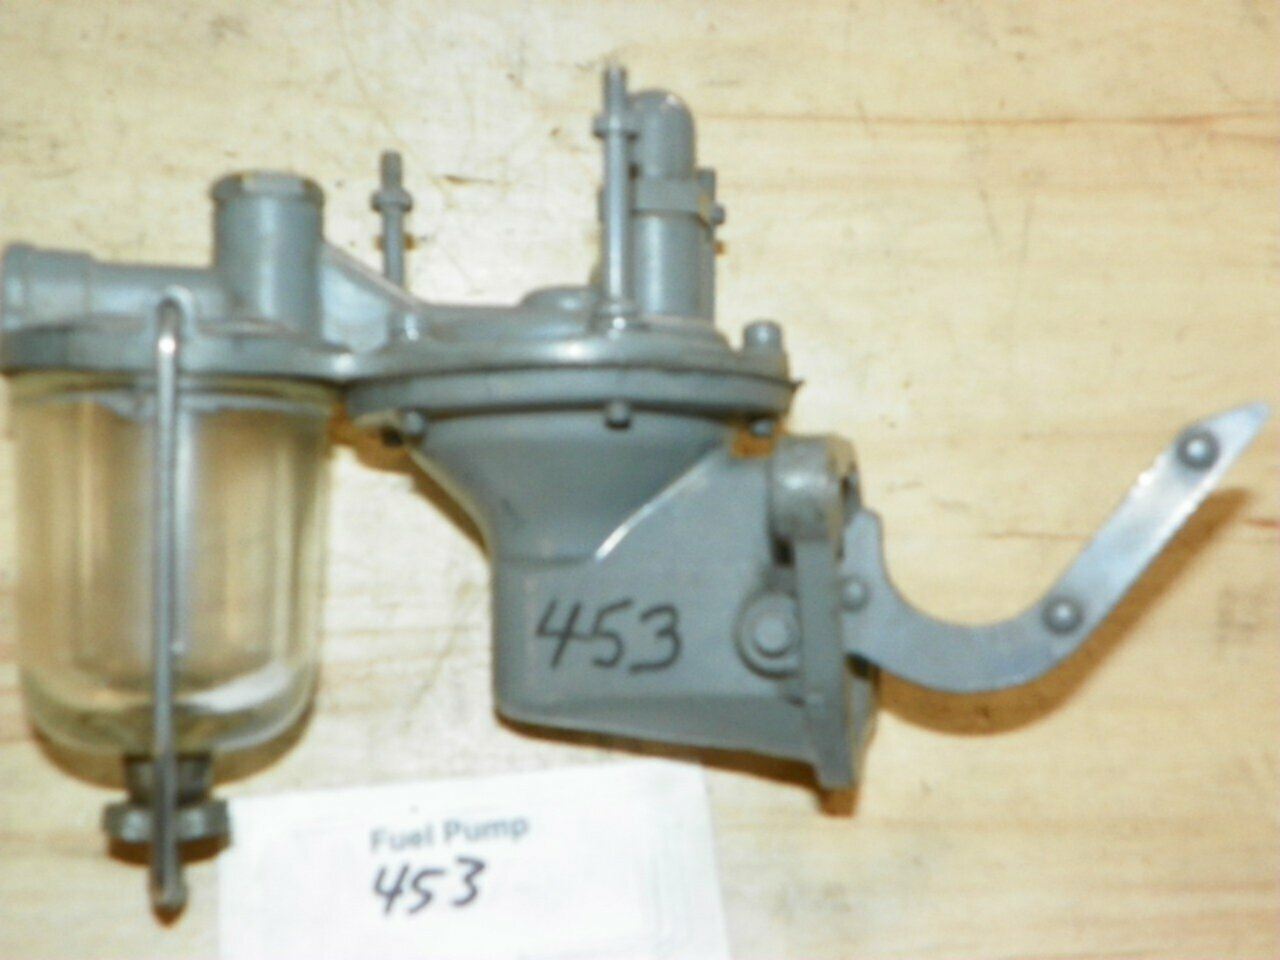 Chrysler DeSoto 1933-1934  Mechanical Fuel Pump Part No.:  453